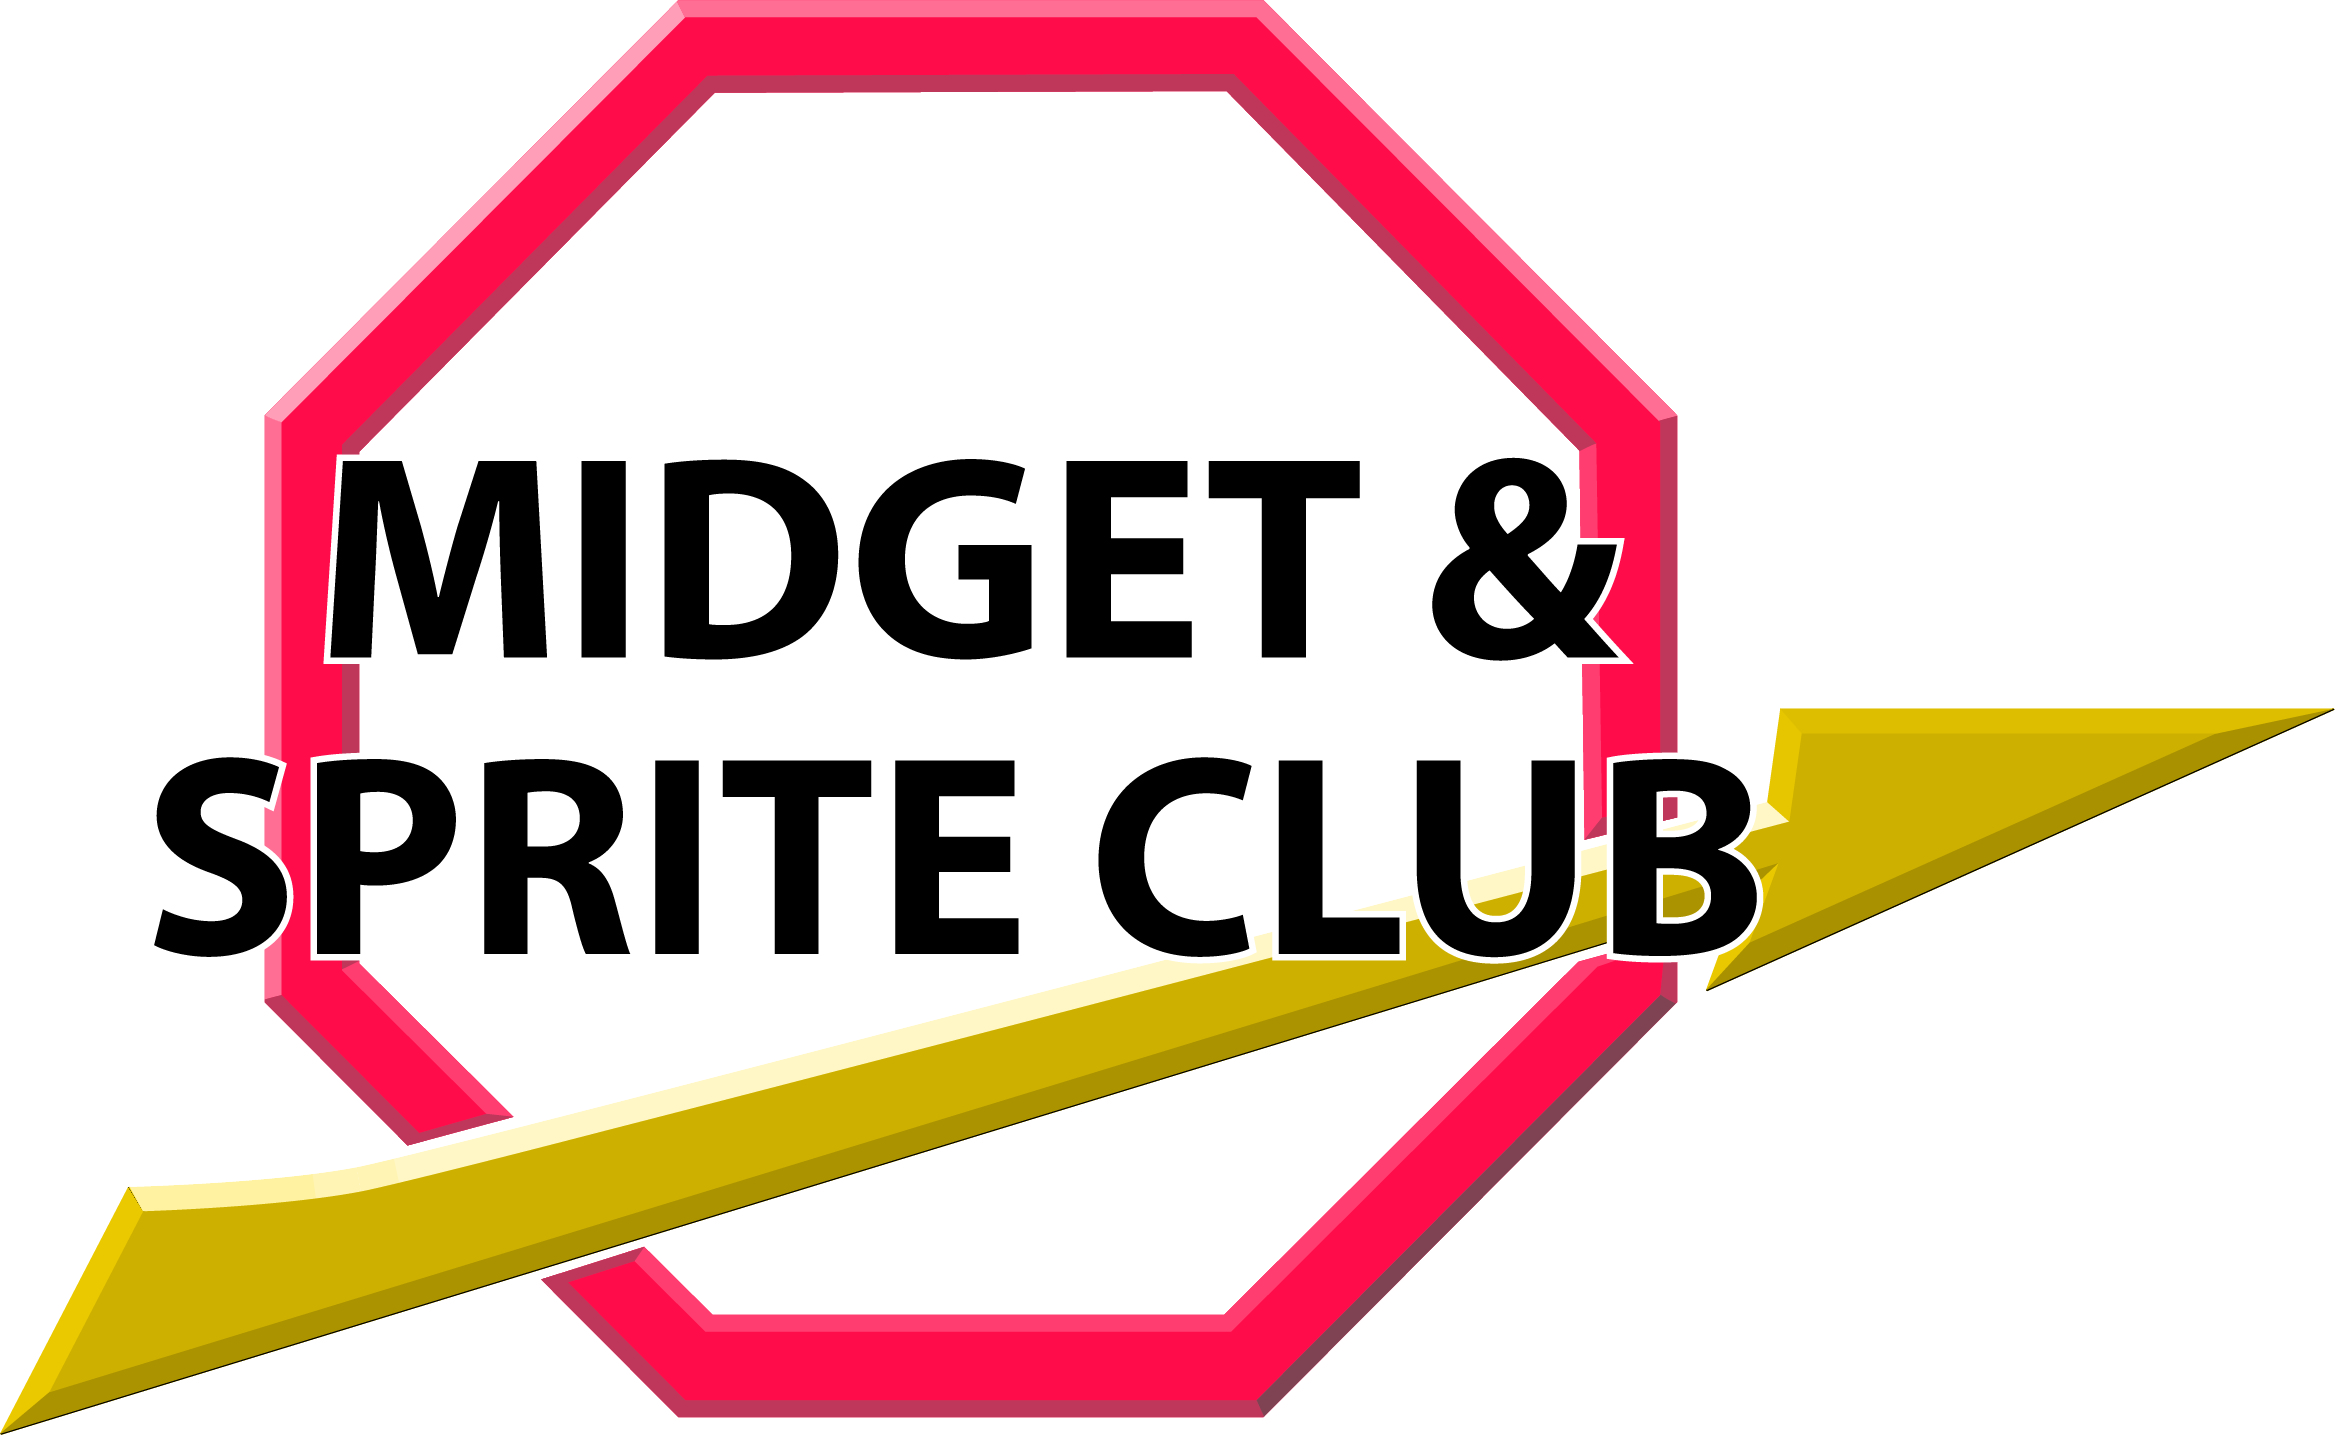 Midget and Sprite Club